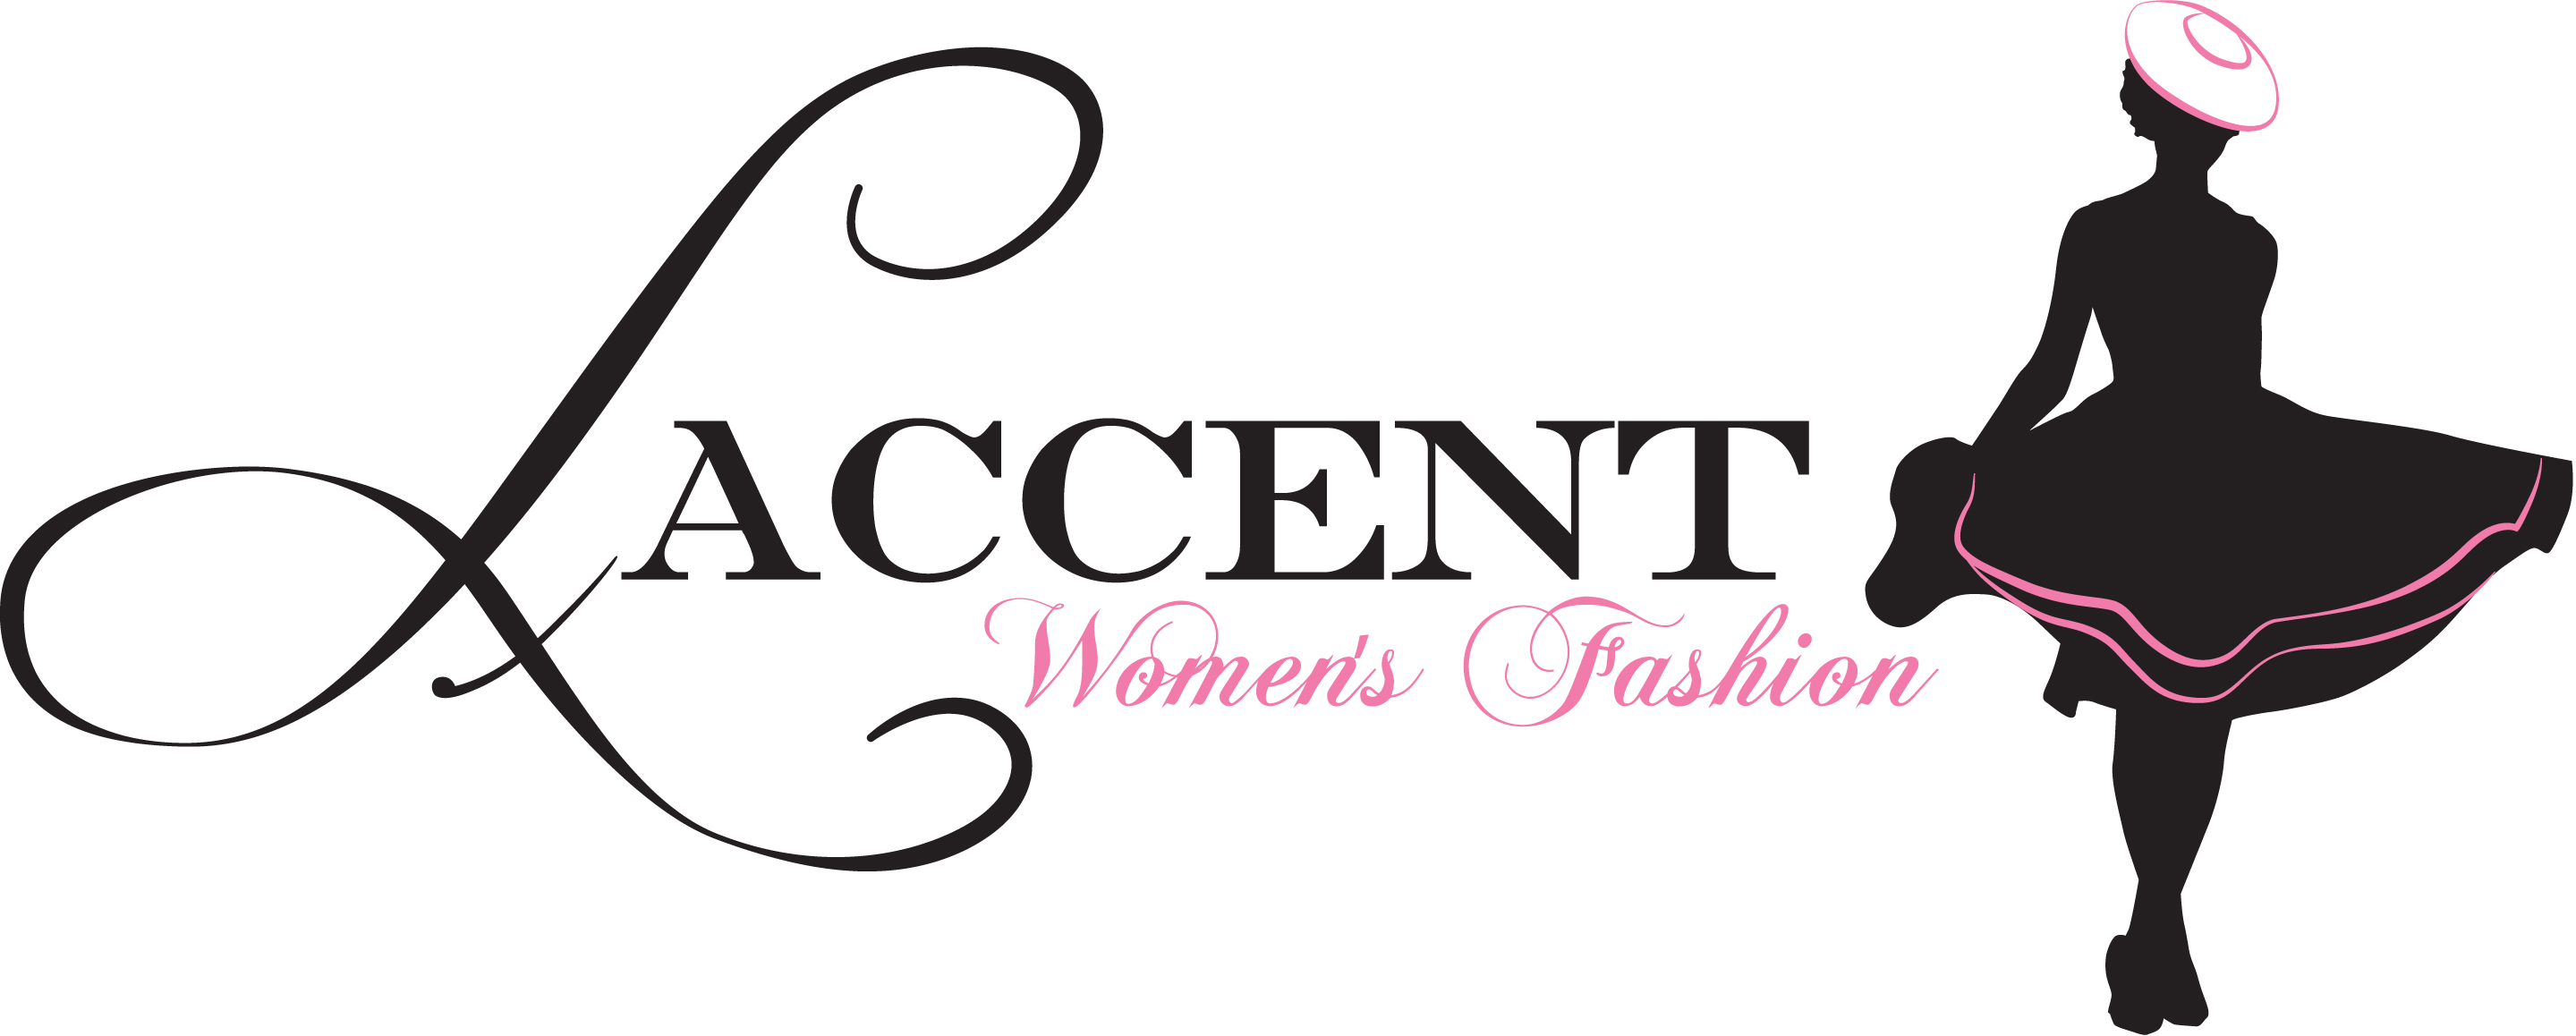 L'Accent Women's Fashion